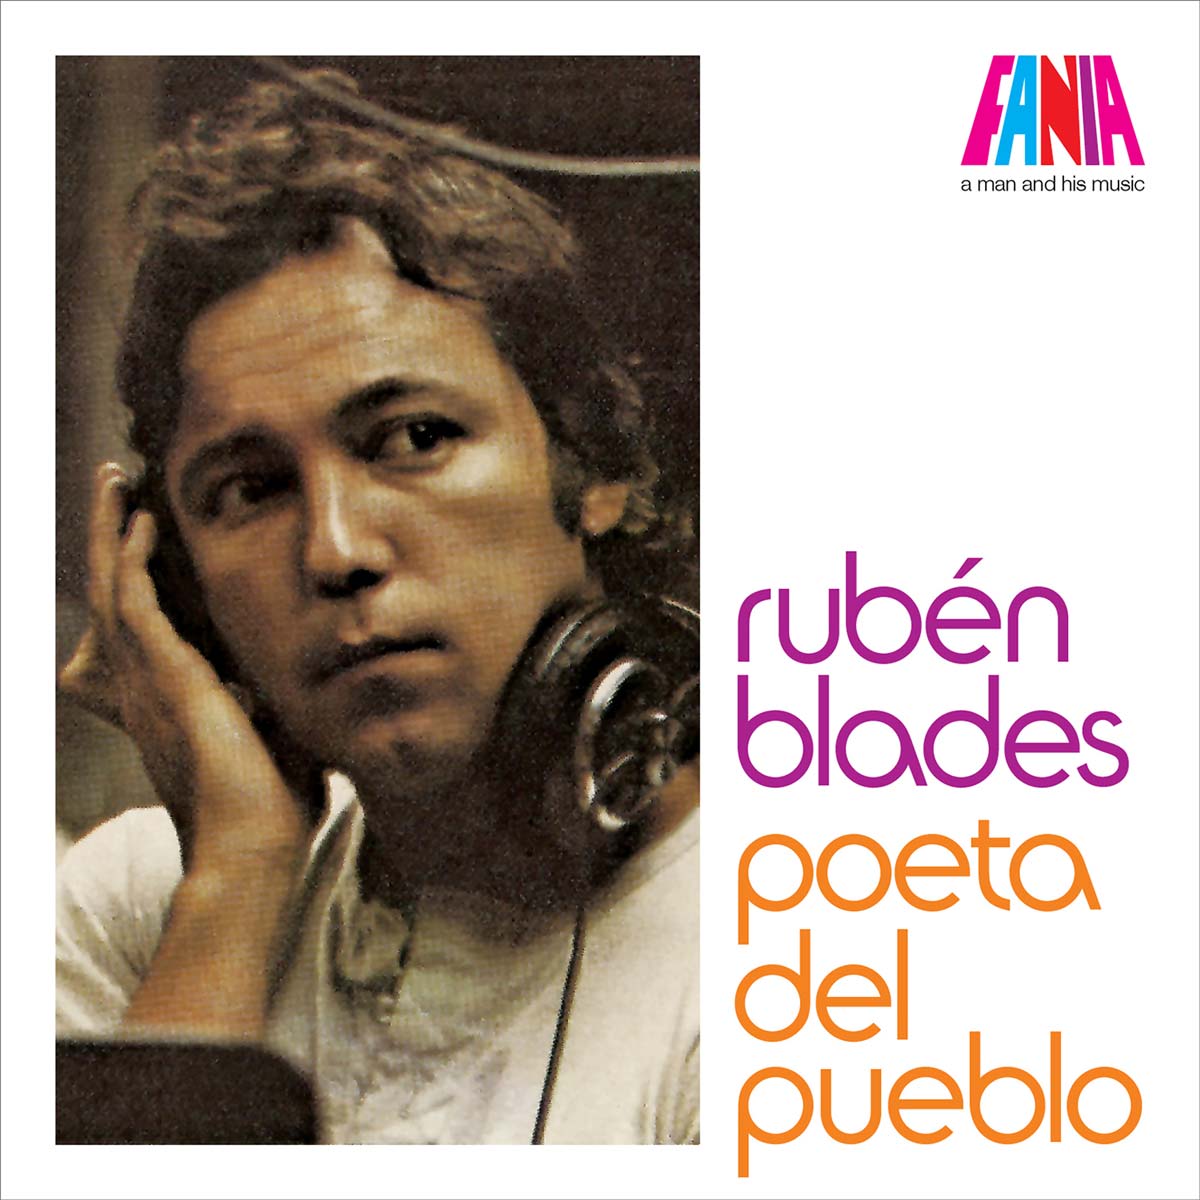 Featured Image for “RUBEN BLADES – A MAN AND HIS MUSIC – POETA DEL PUEBLO”